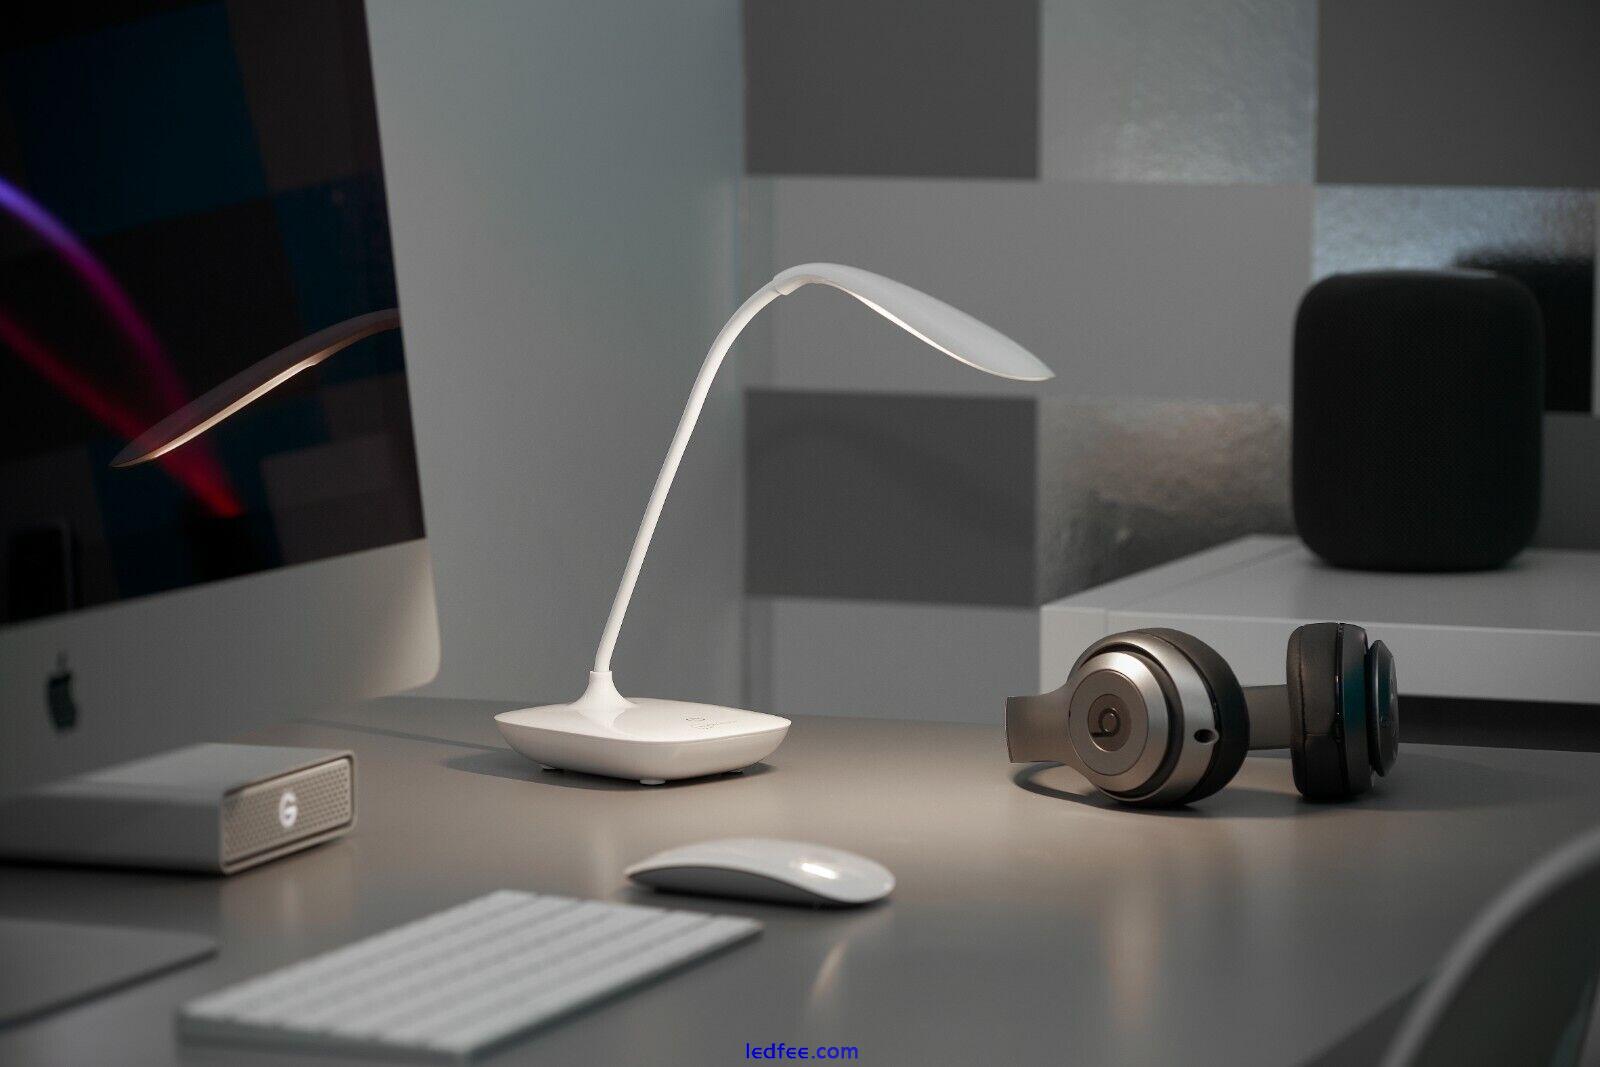 Auraglow Wireless Cordless Rechargeable Flexible LED Desk Reading Lamp Light 1 